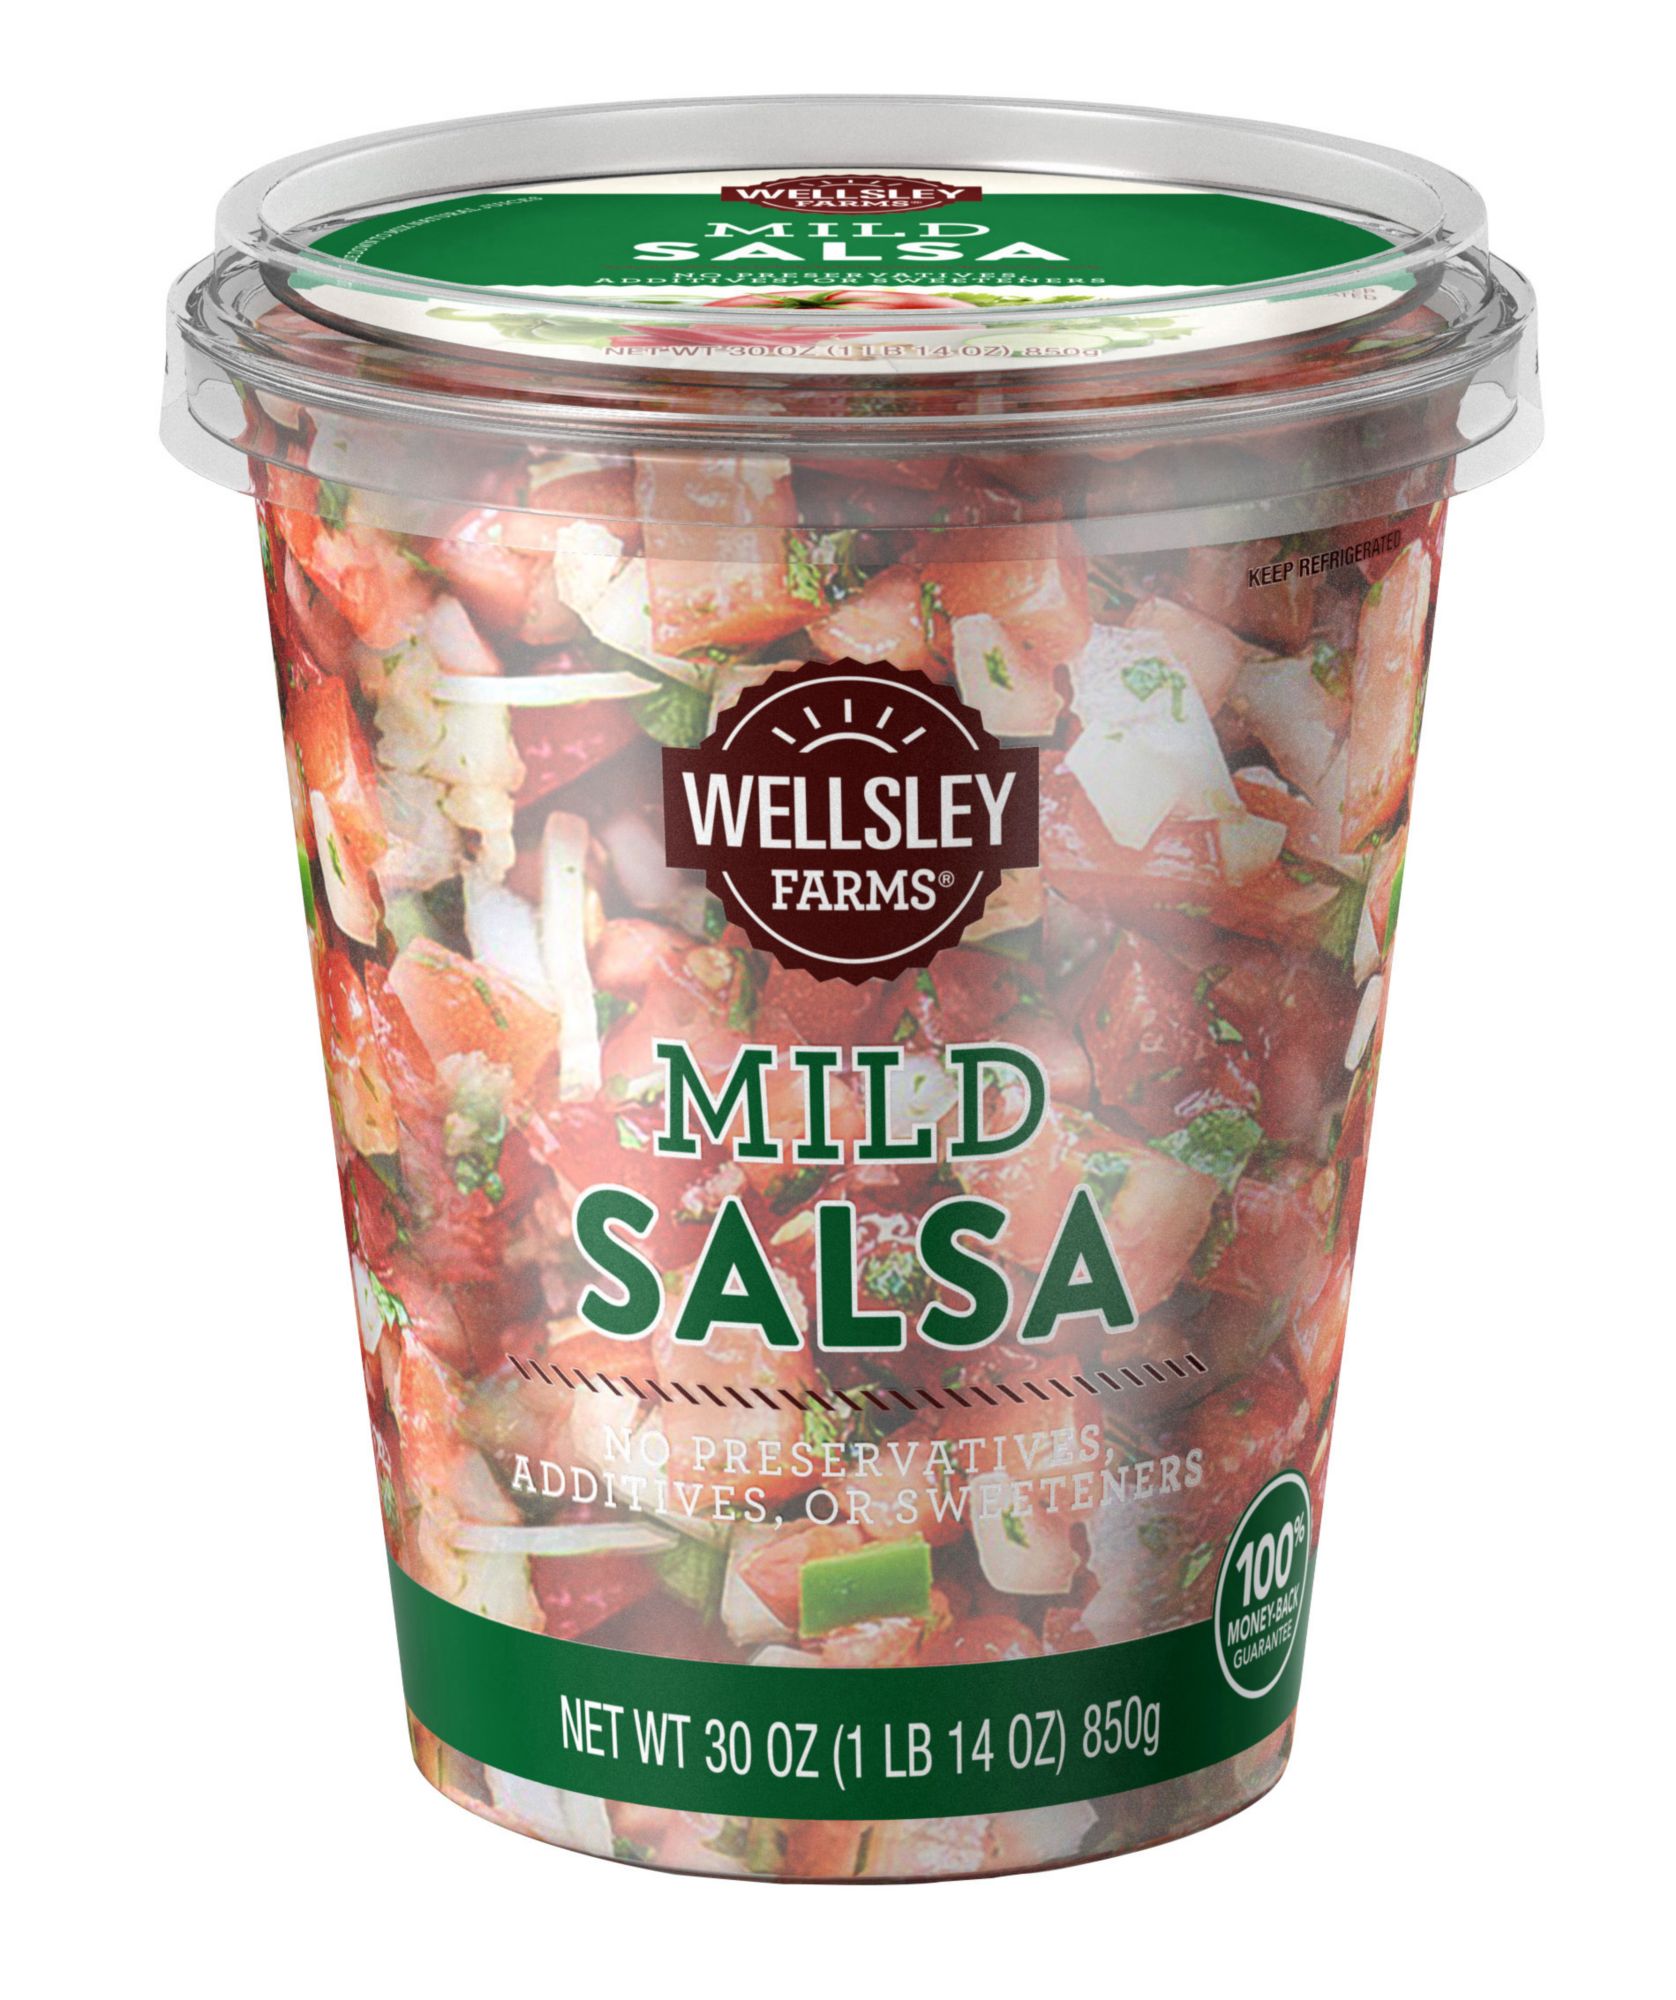 Wellsley Farms Mild Salsa, 30 oz.